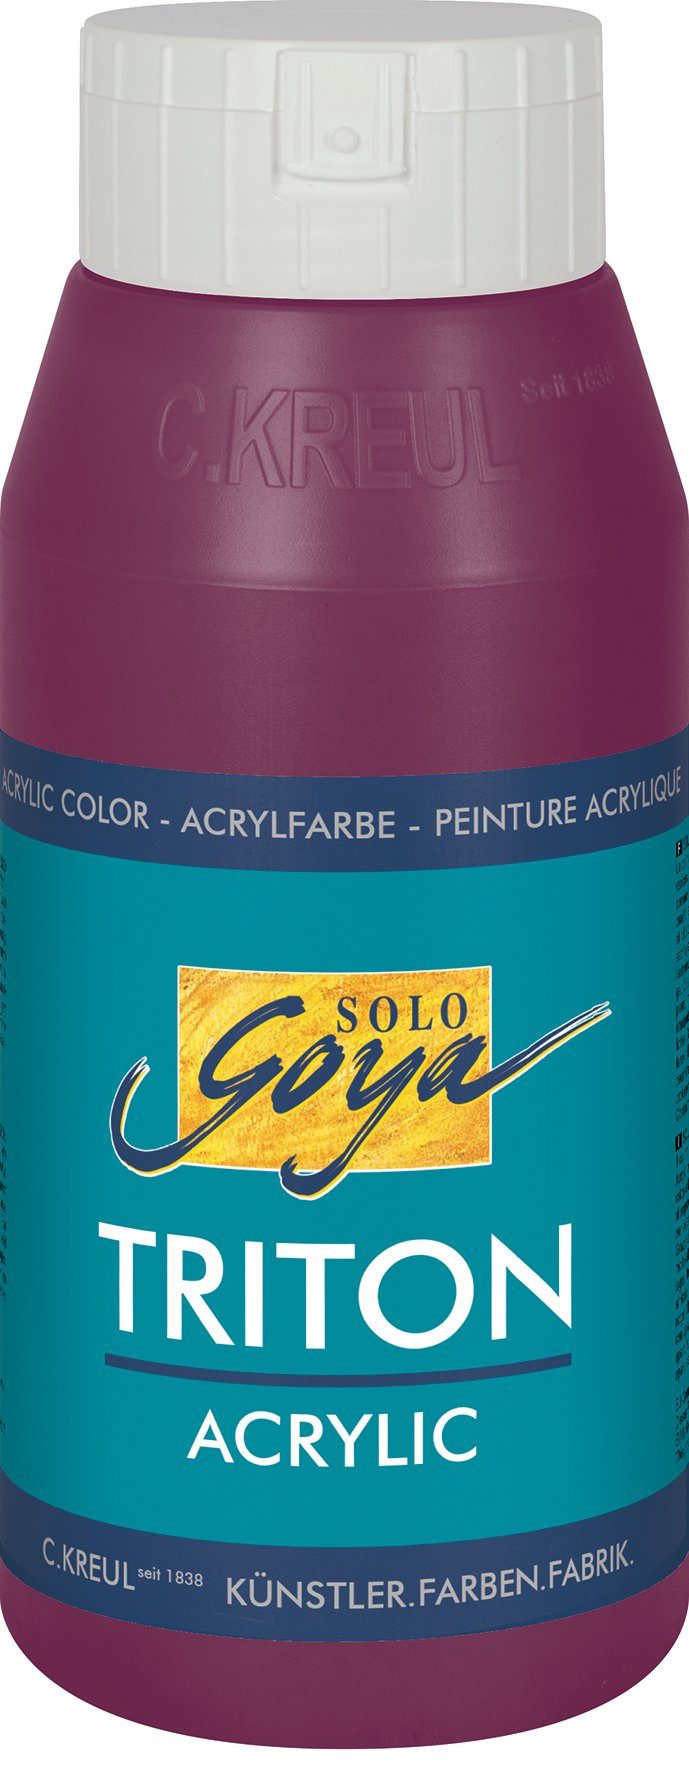 Acrylfarbe Solo Goya 750 Acrylic, Bordeaux Triton ml Kreul